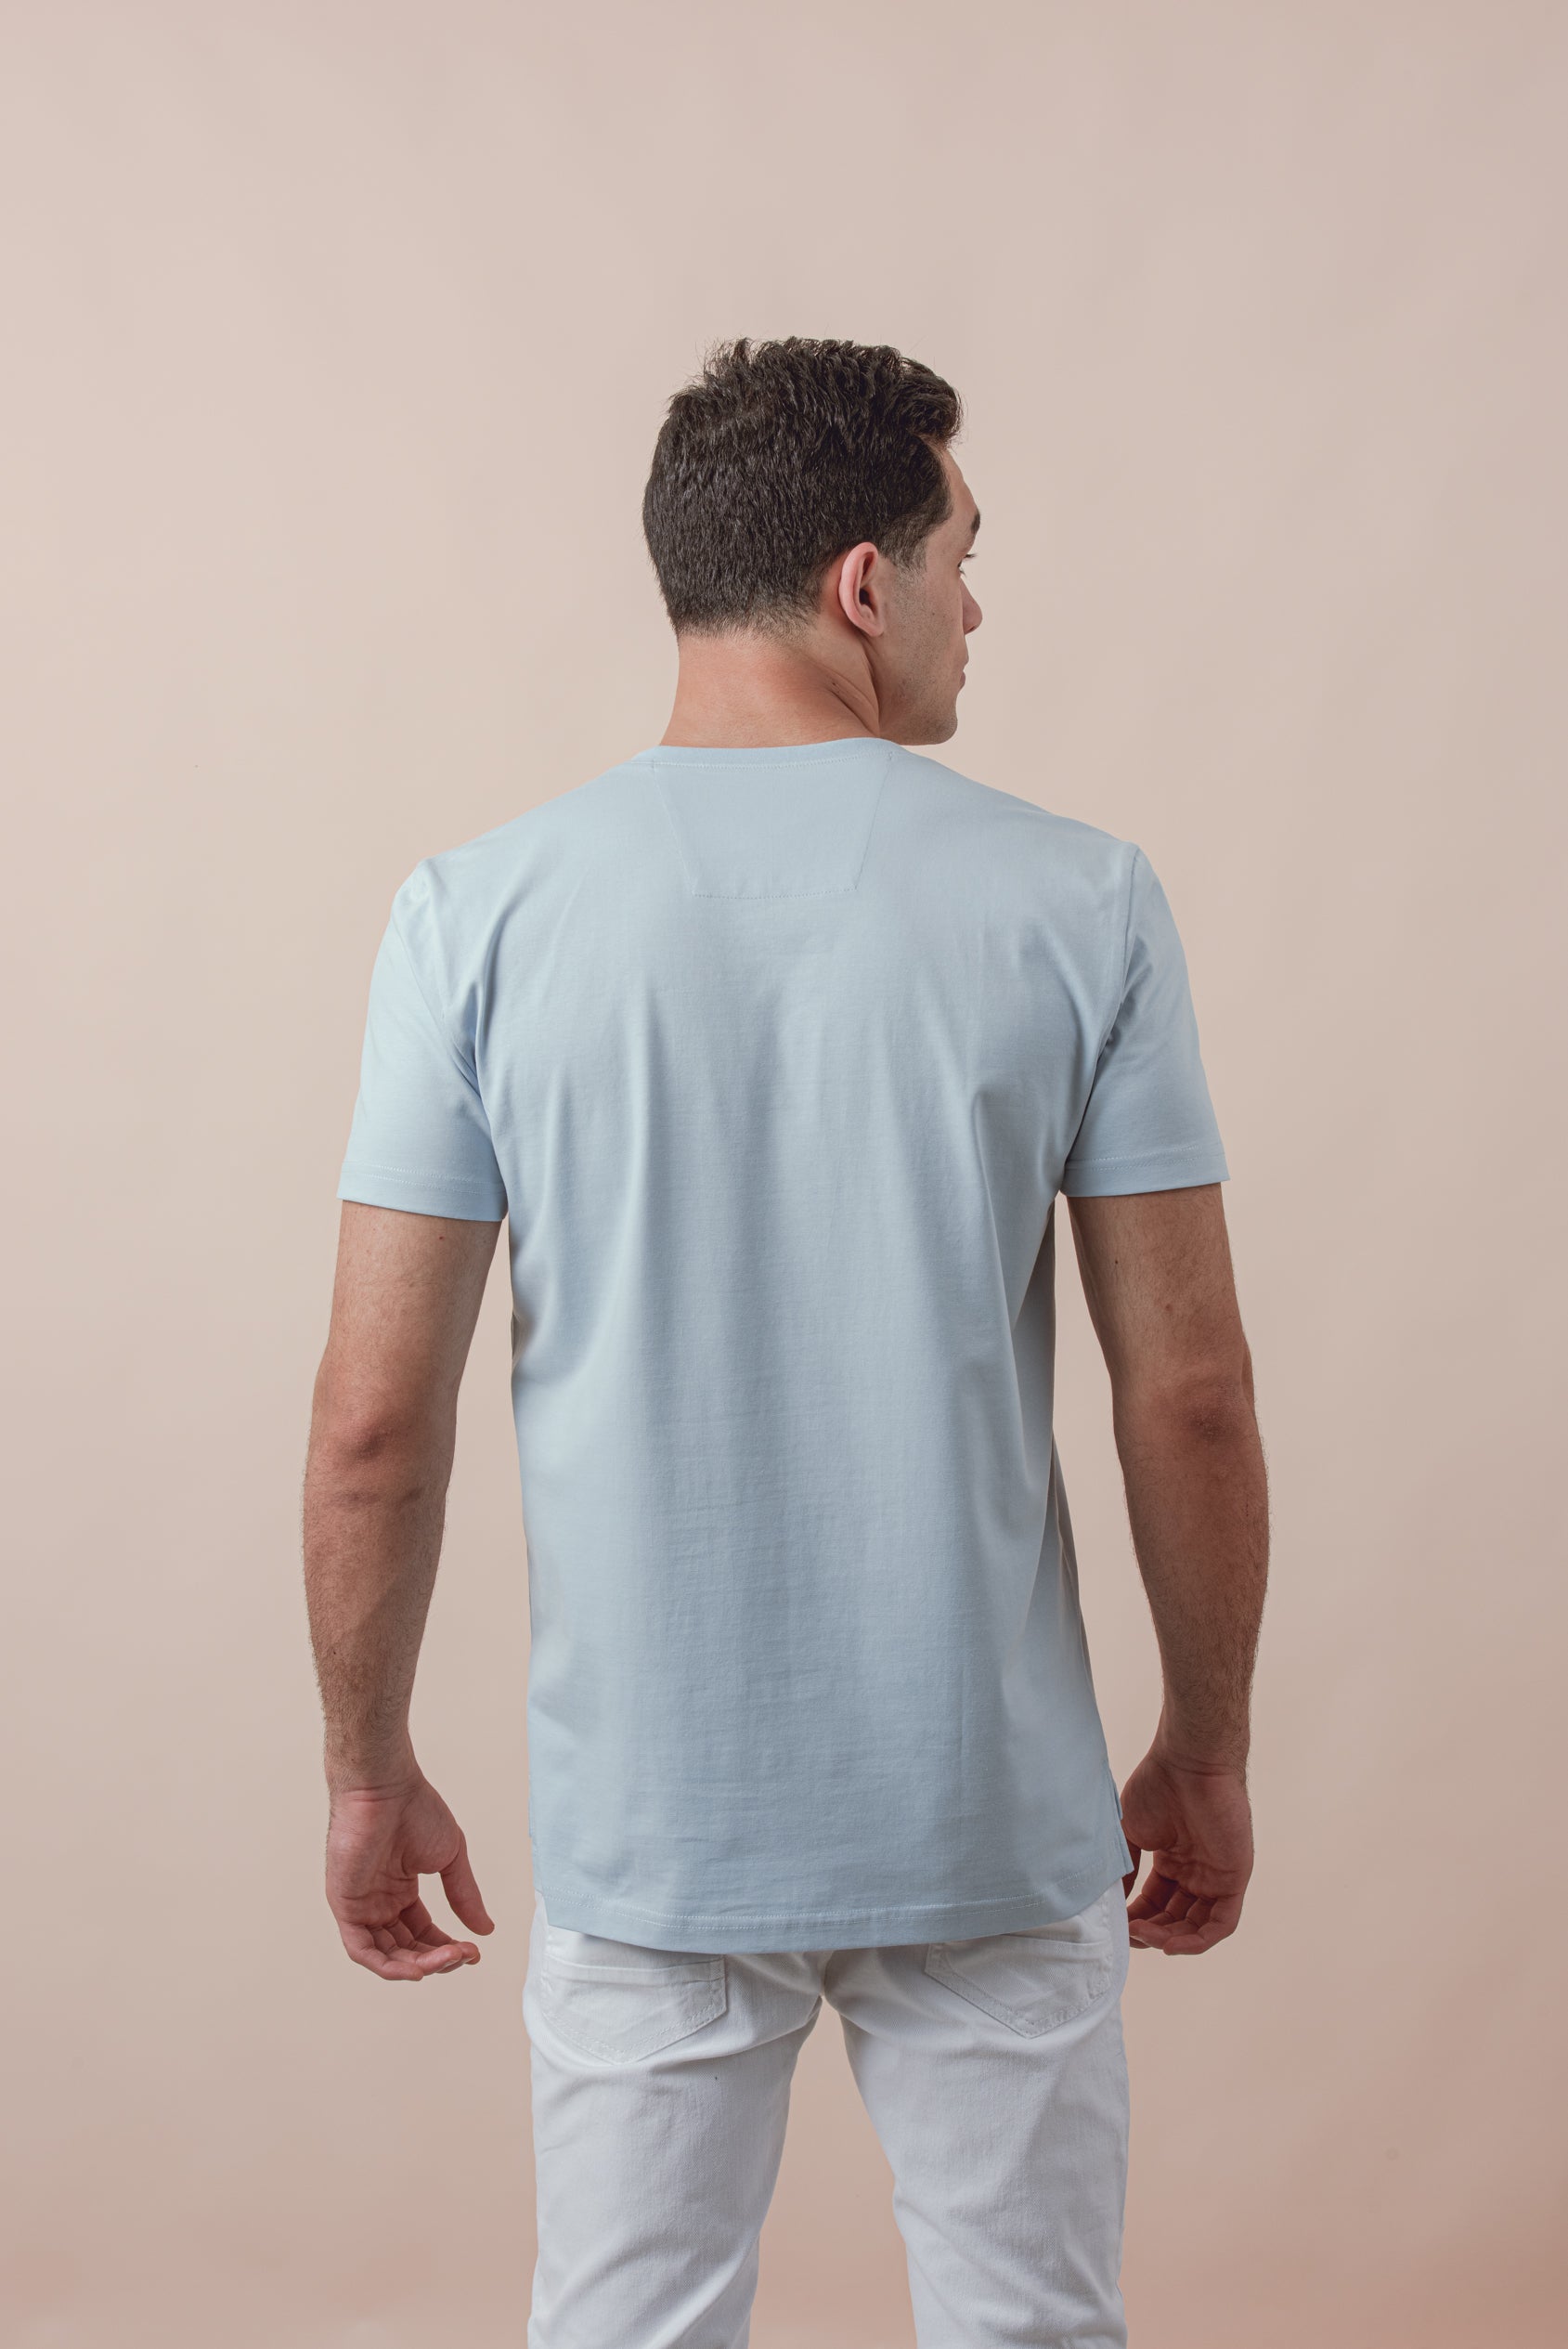 Cotton V-Neck Slim fit T-Shirt